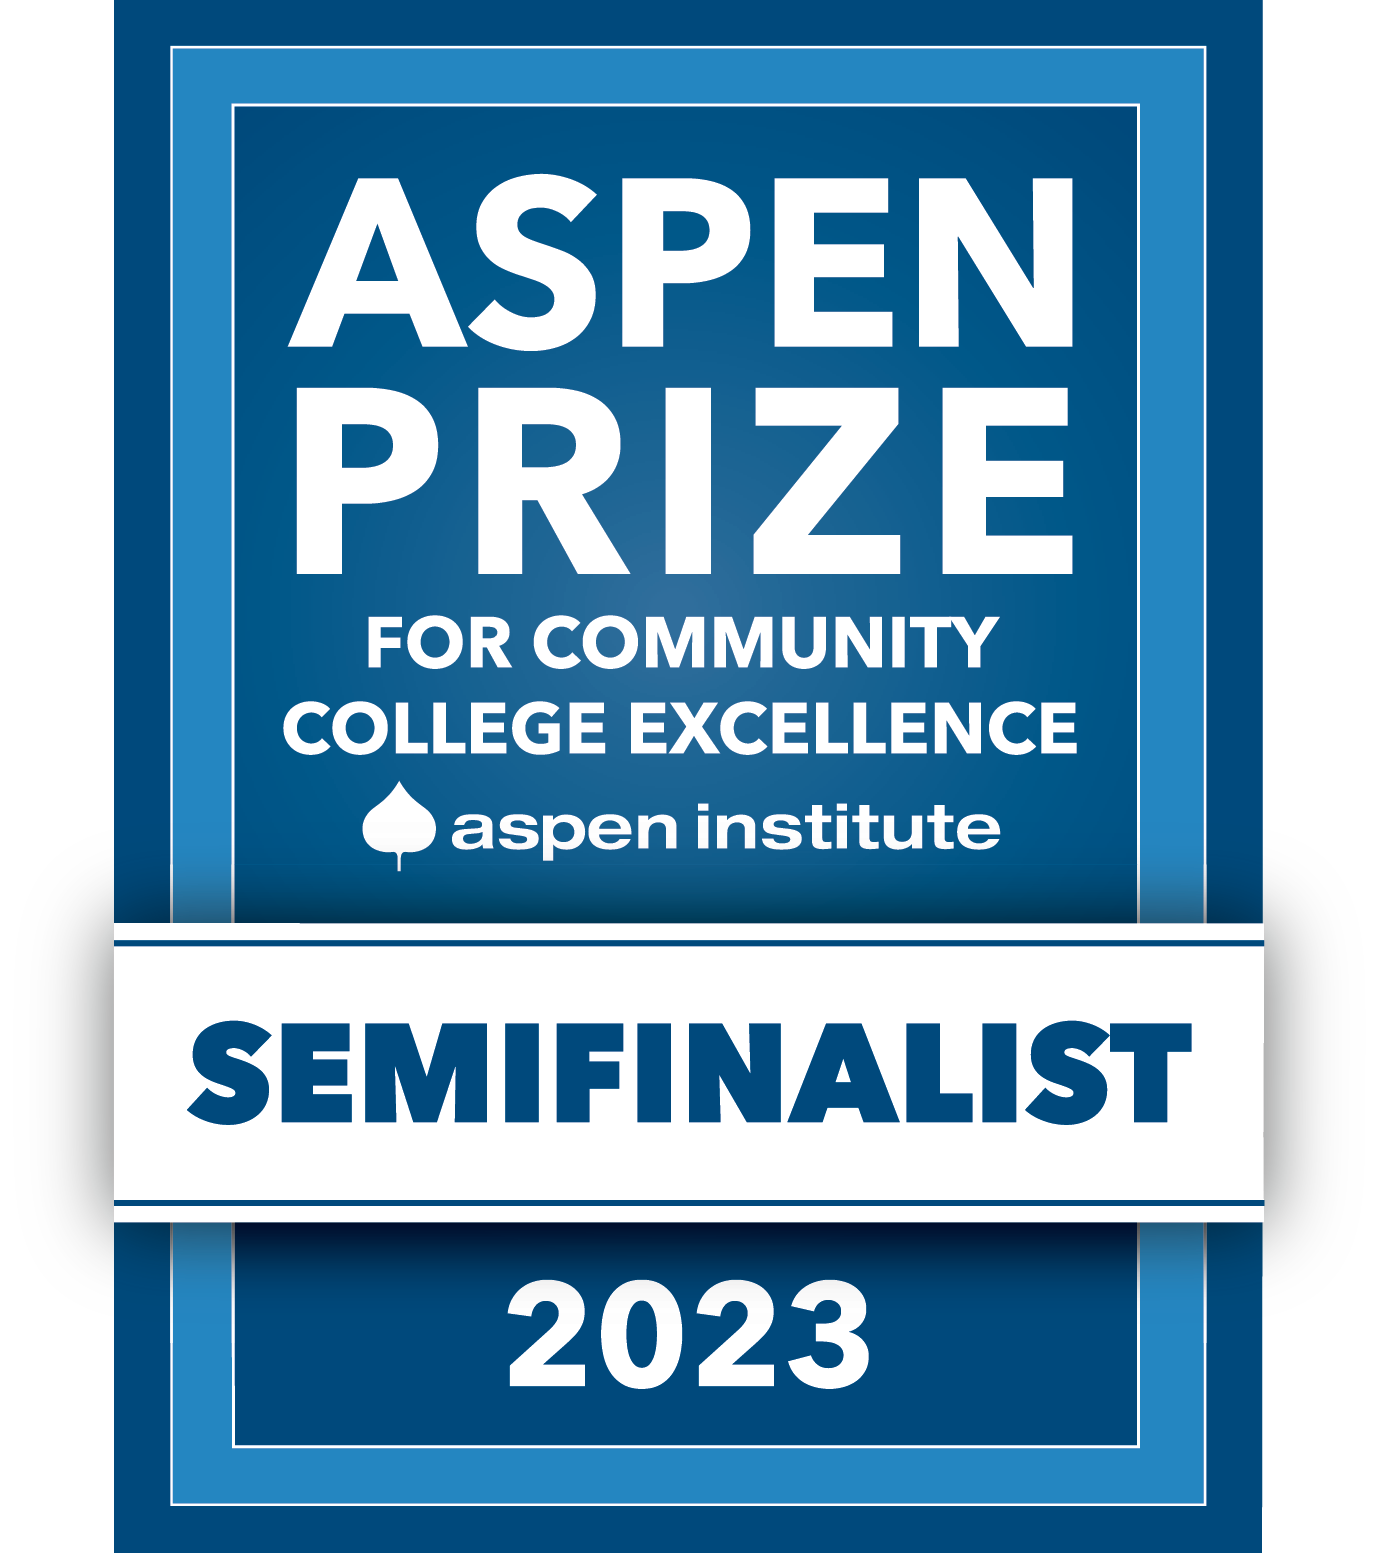 2023 Aspen Prize Semifinalist